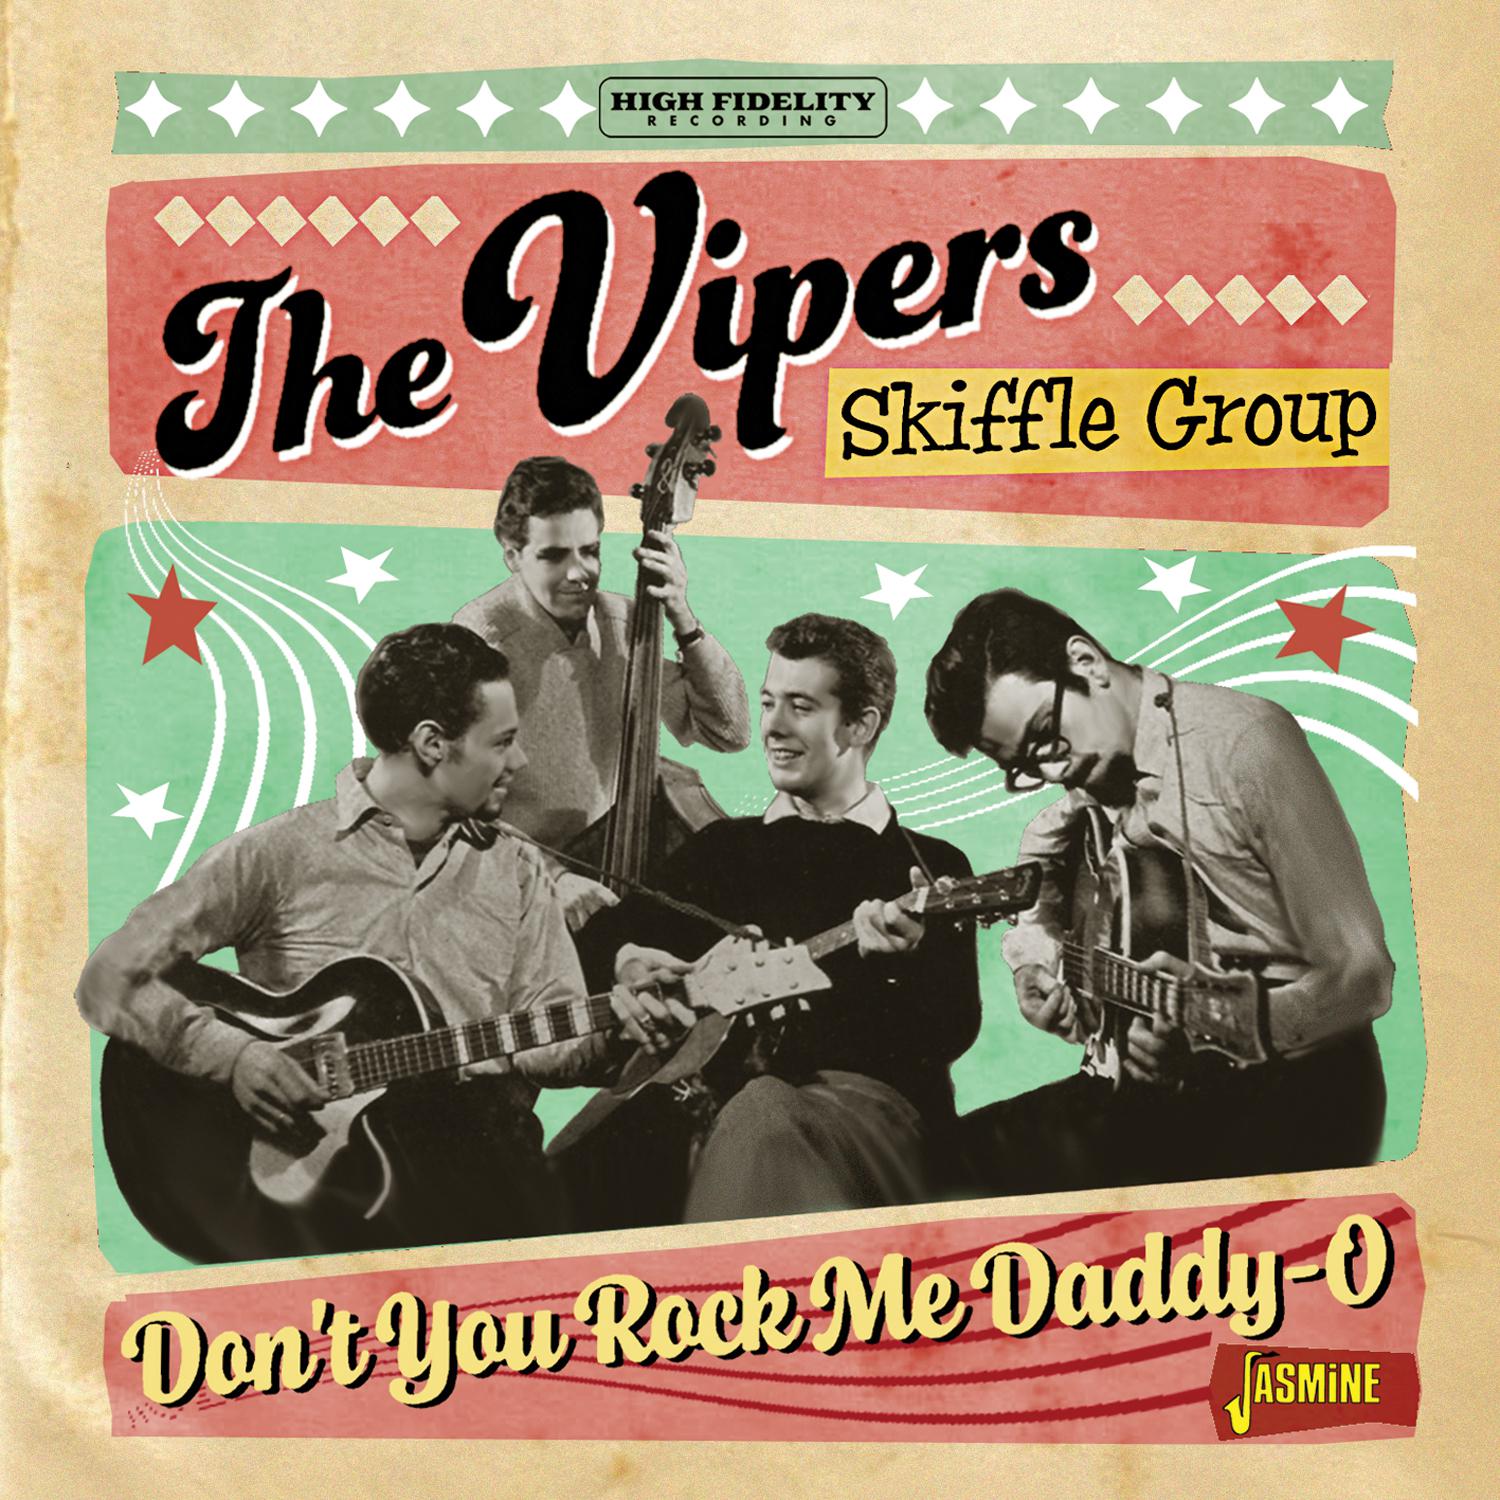 The Vipers Skiffle Group - John B. Sails